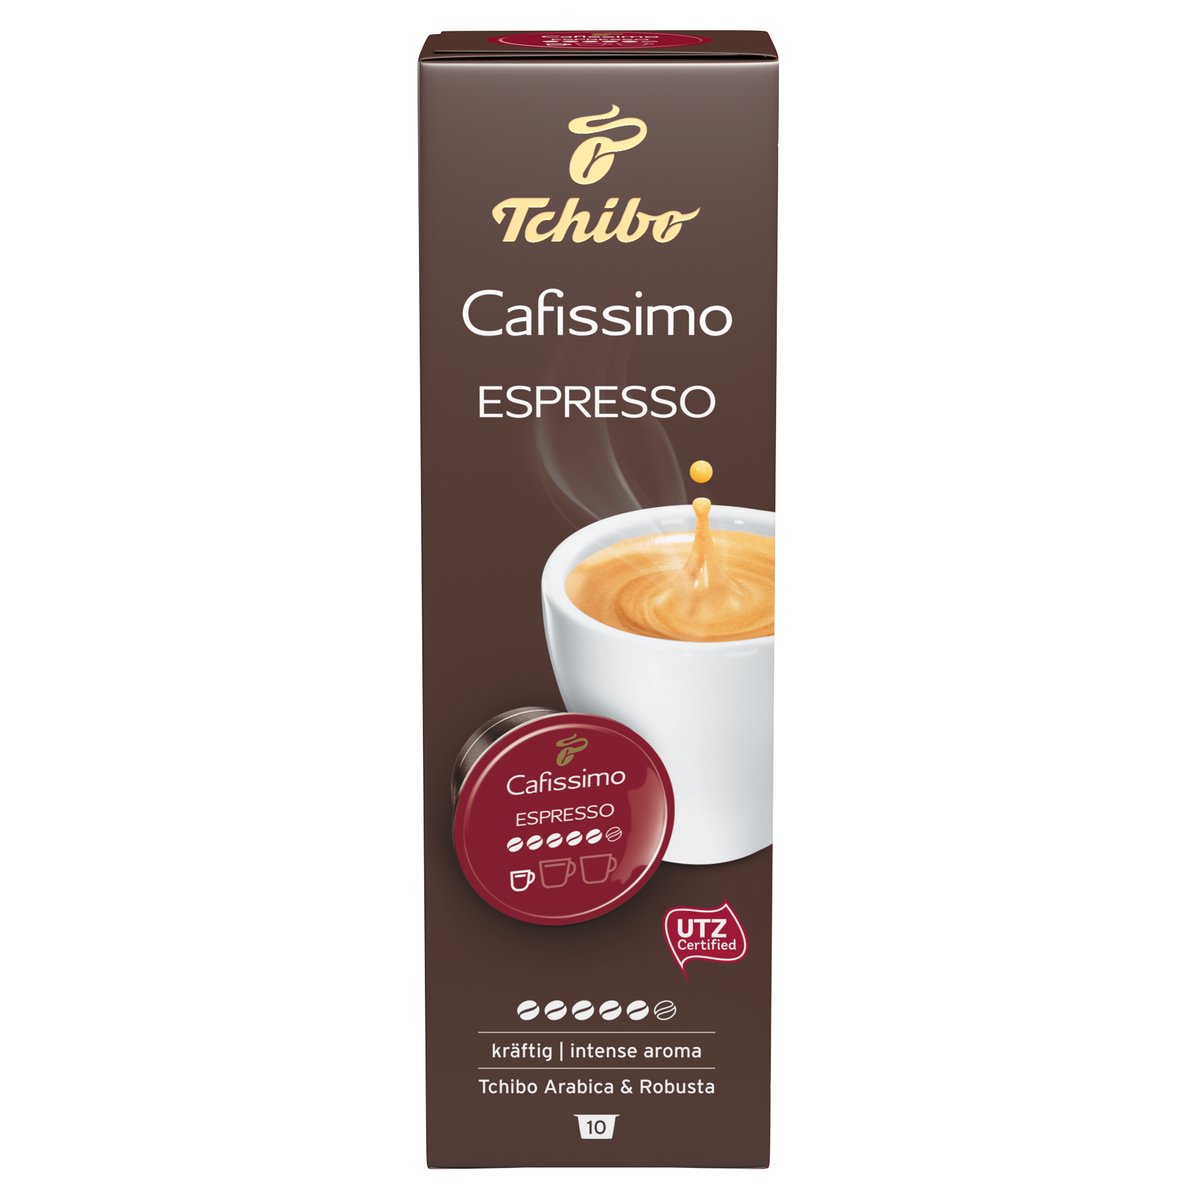 Tchibo Cafissimo Espresso Kräftig Intense Aroma